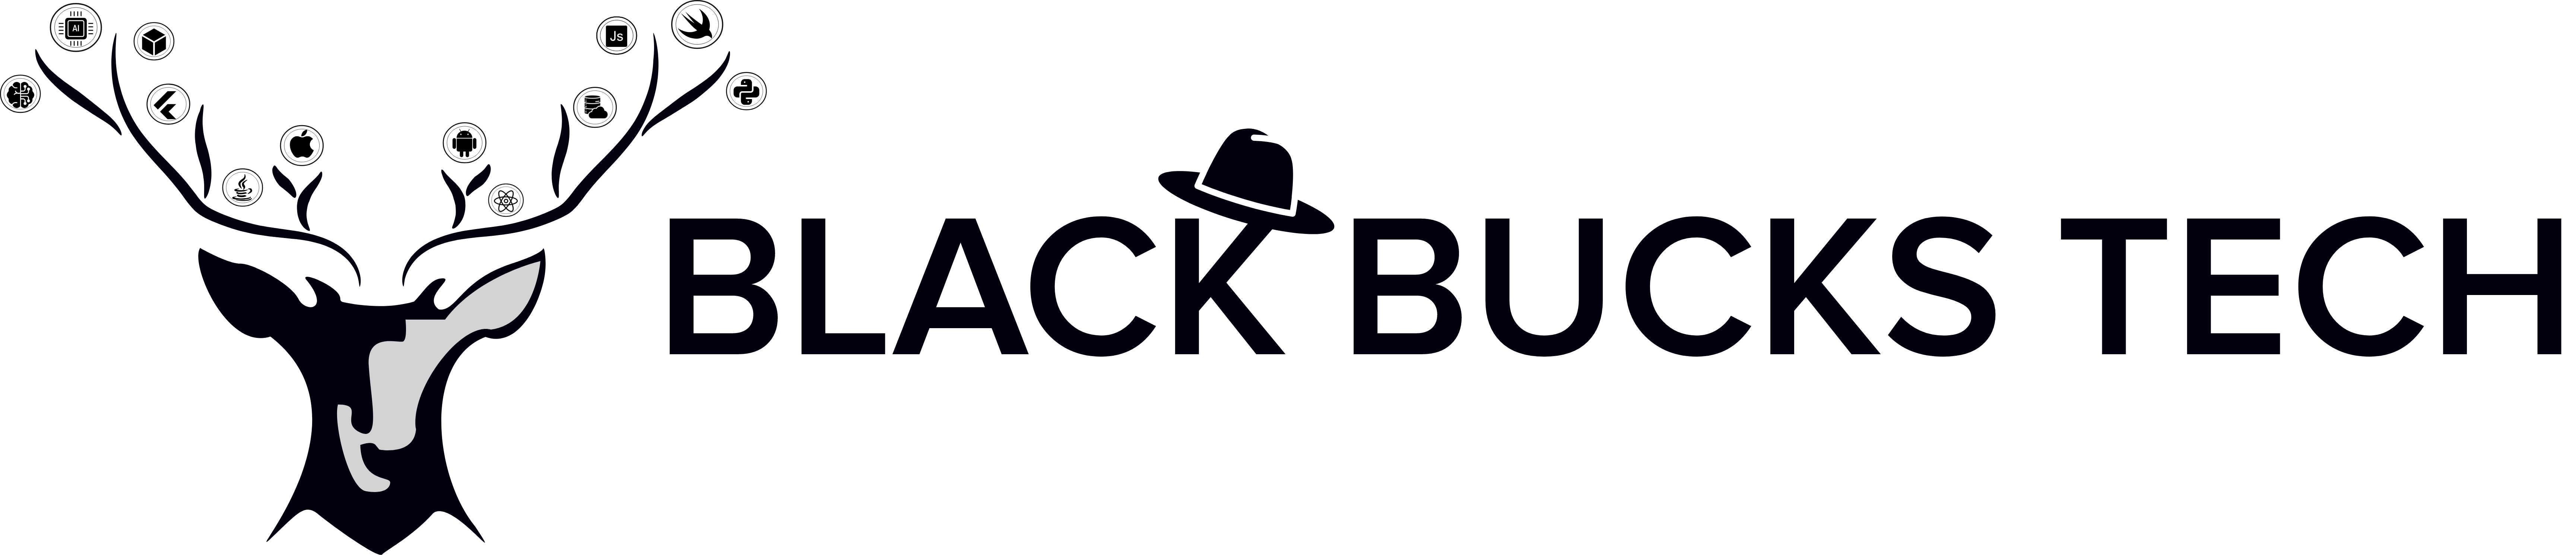 Black hat bucks tech